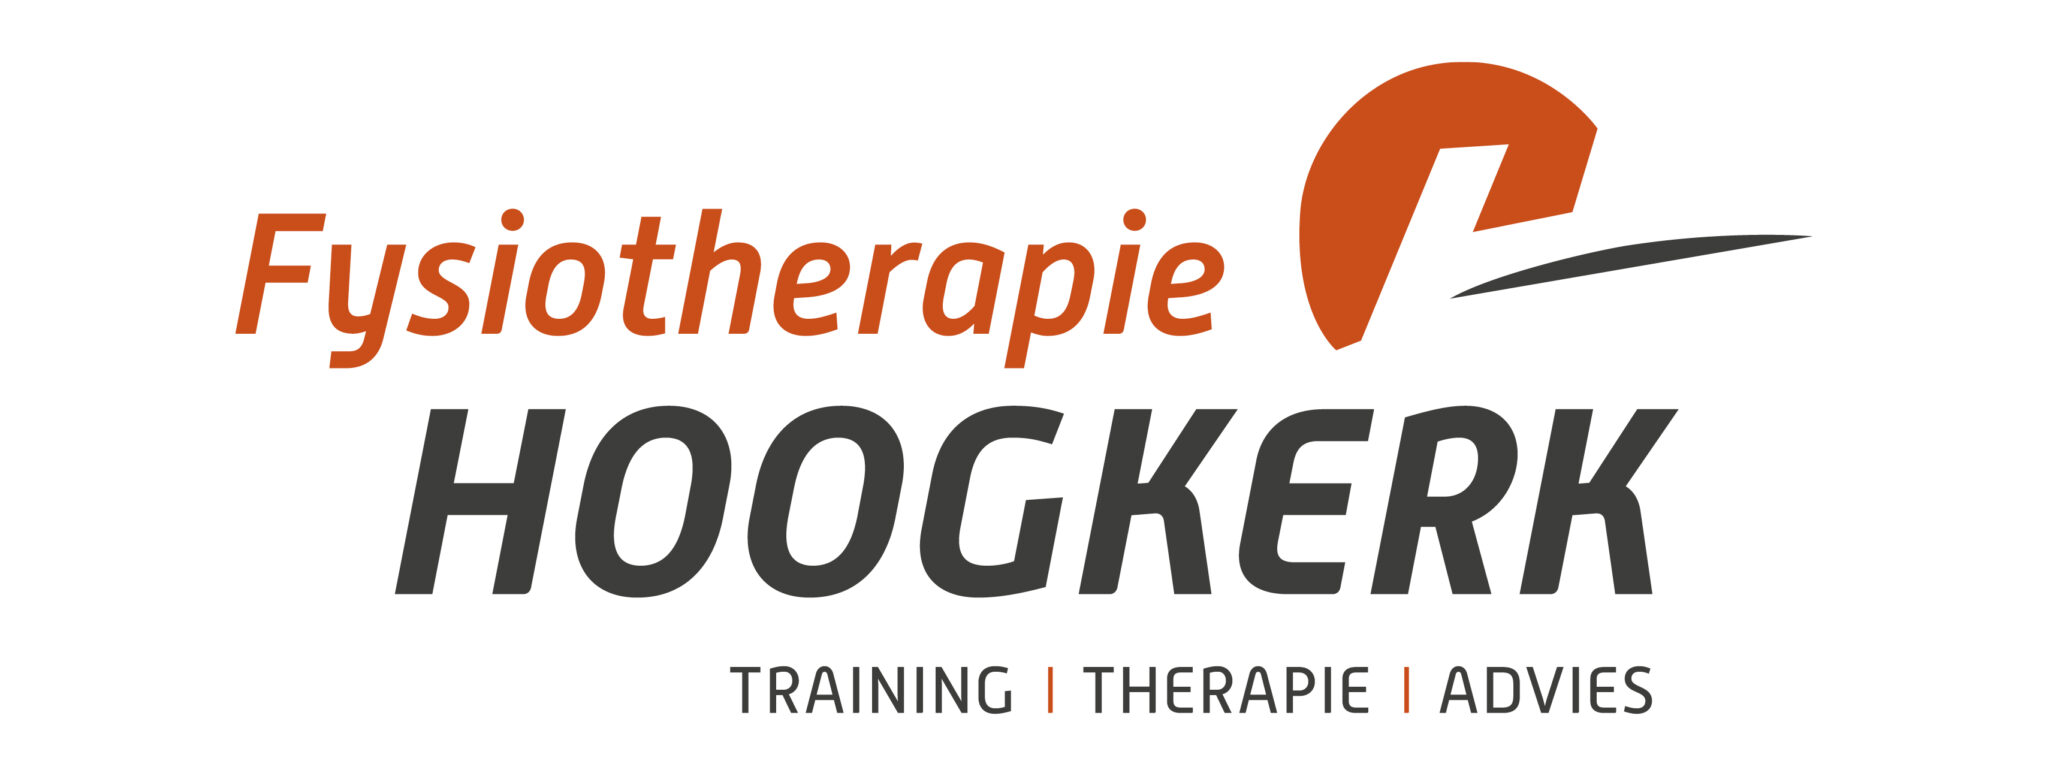 Fysiotherapie Hoogkerk